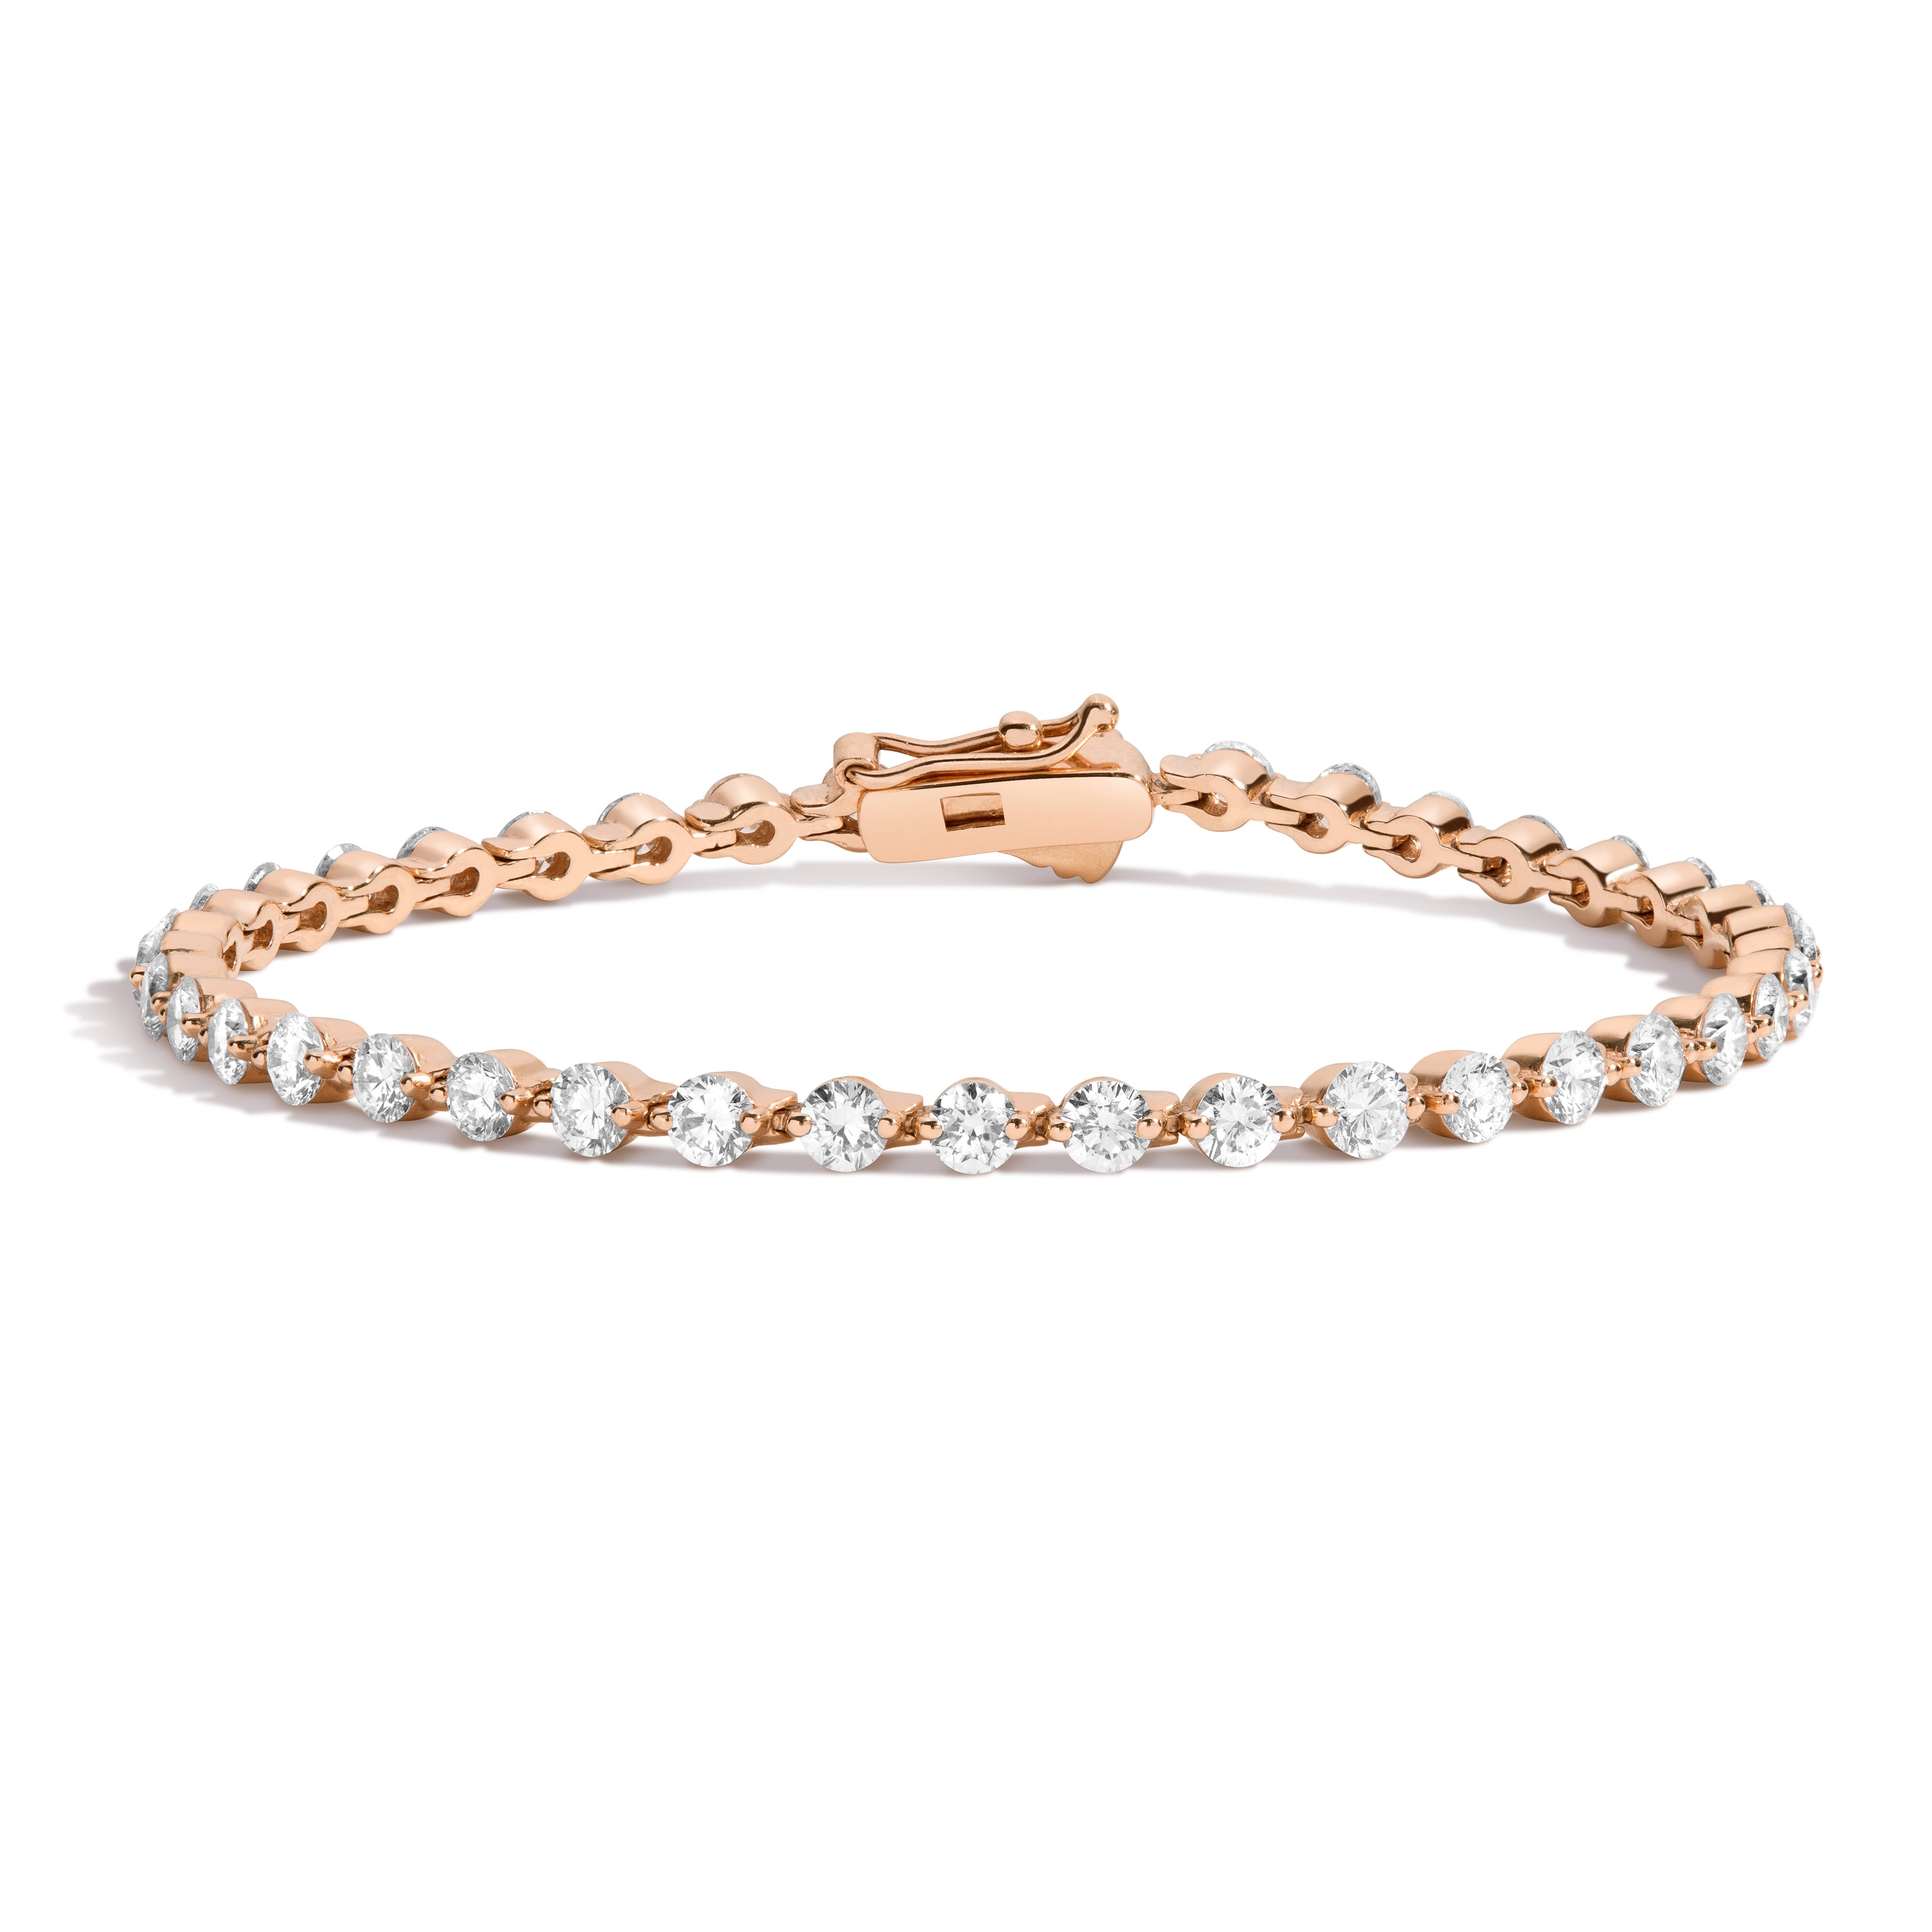 Buy American Diamond Rose Gold Bracelet Online